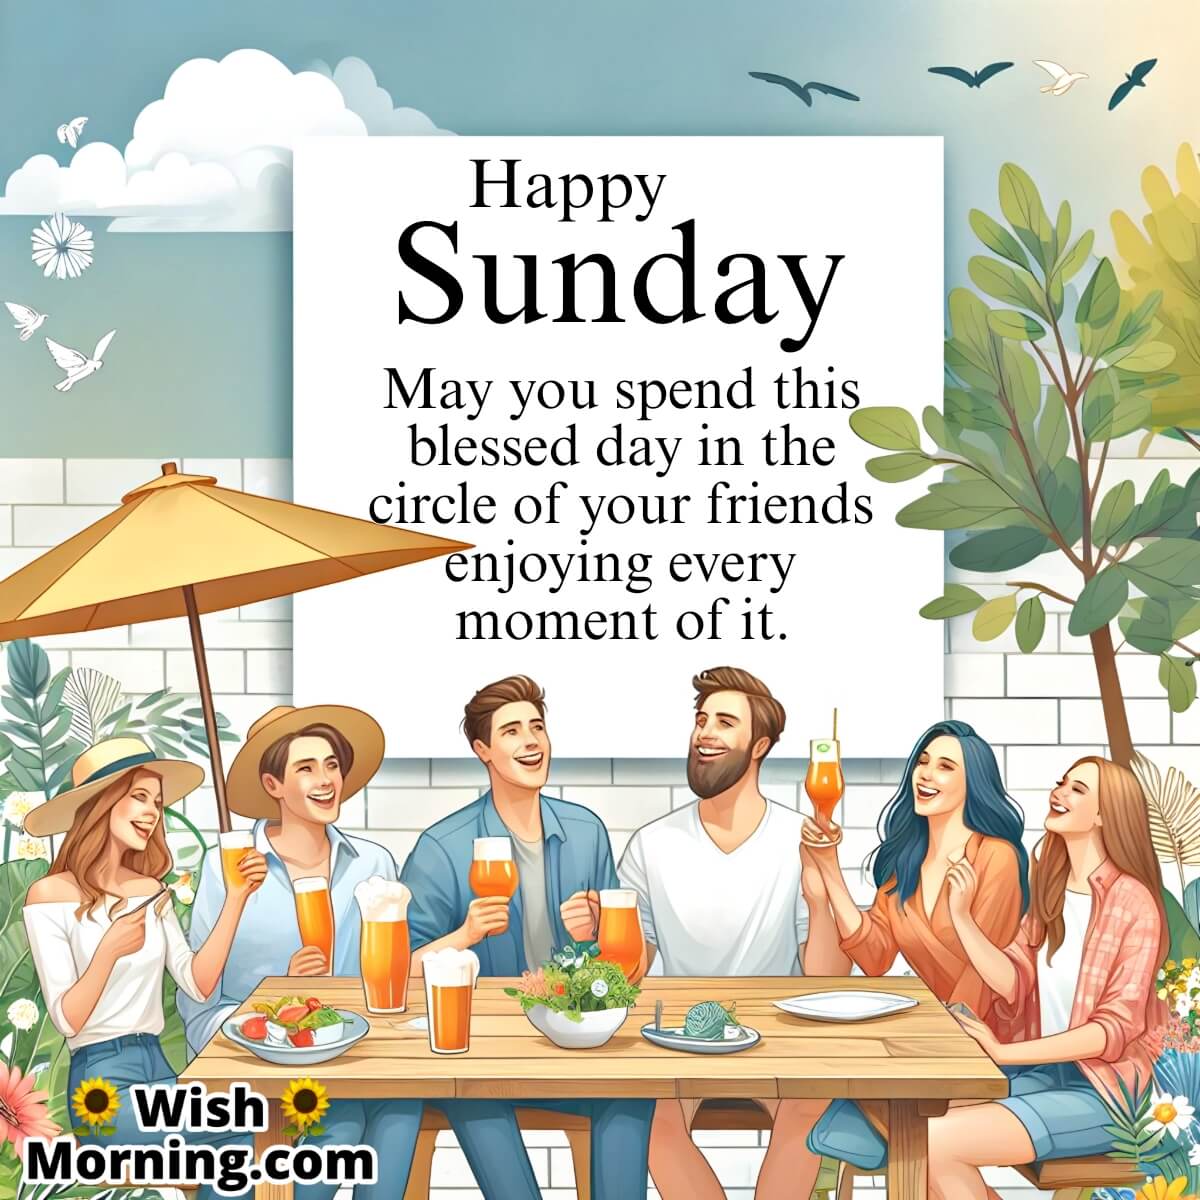 Happy Sunday Friends Image